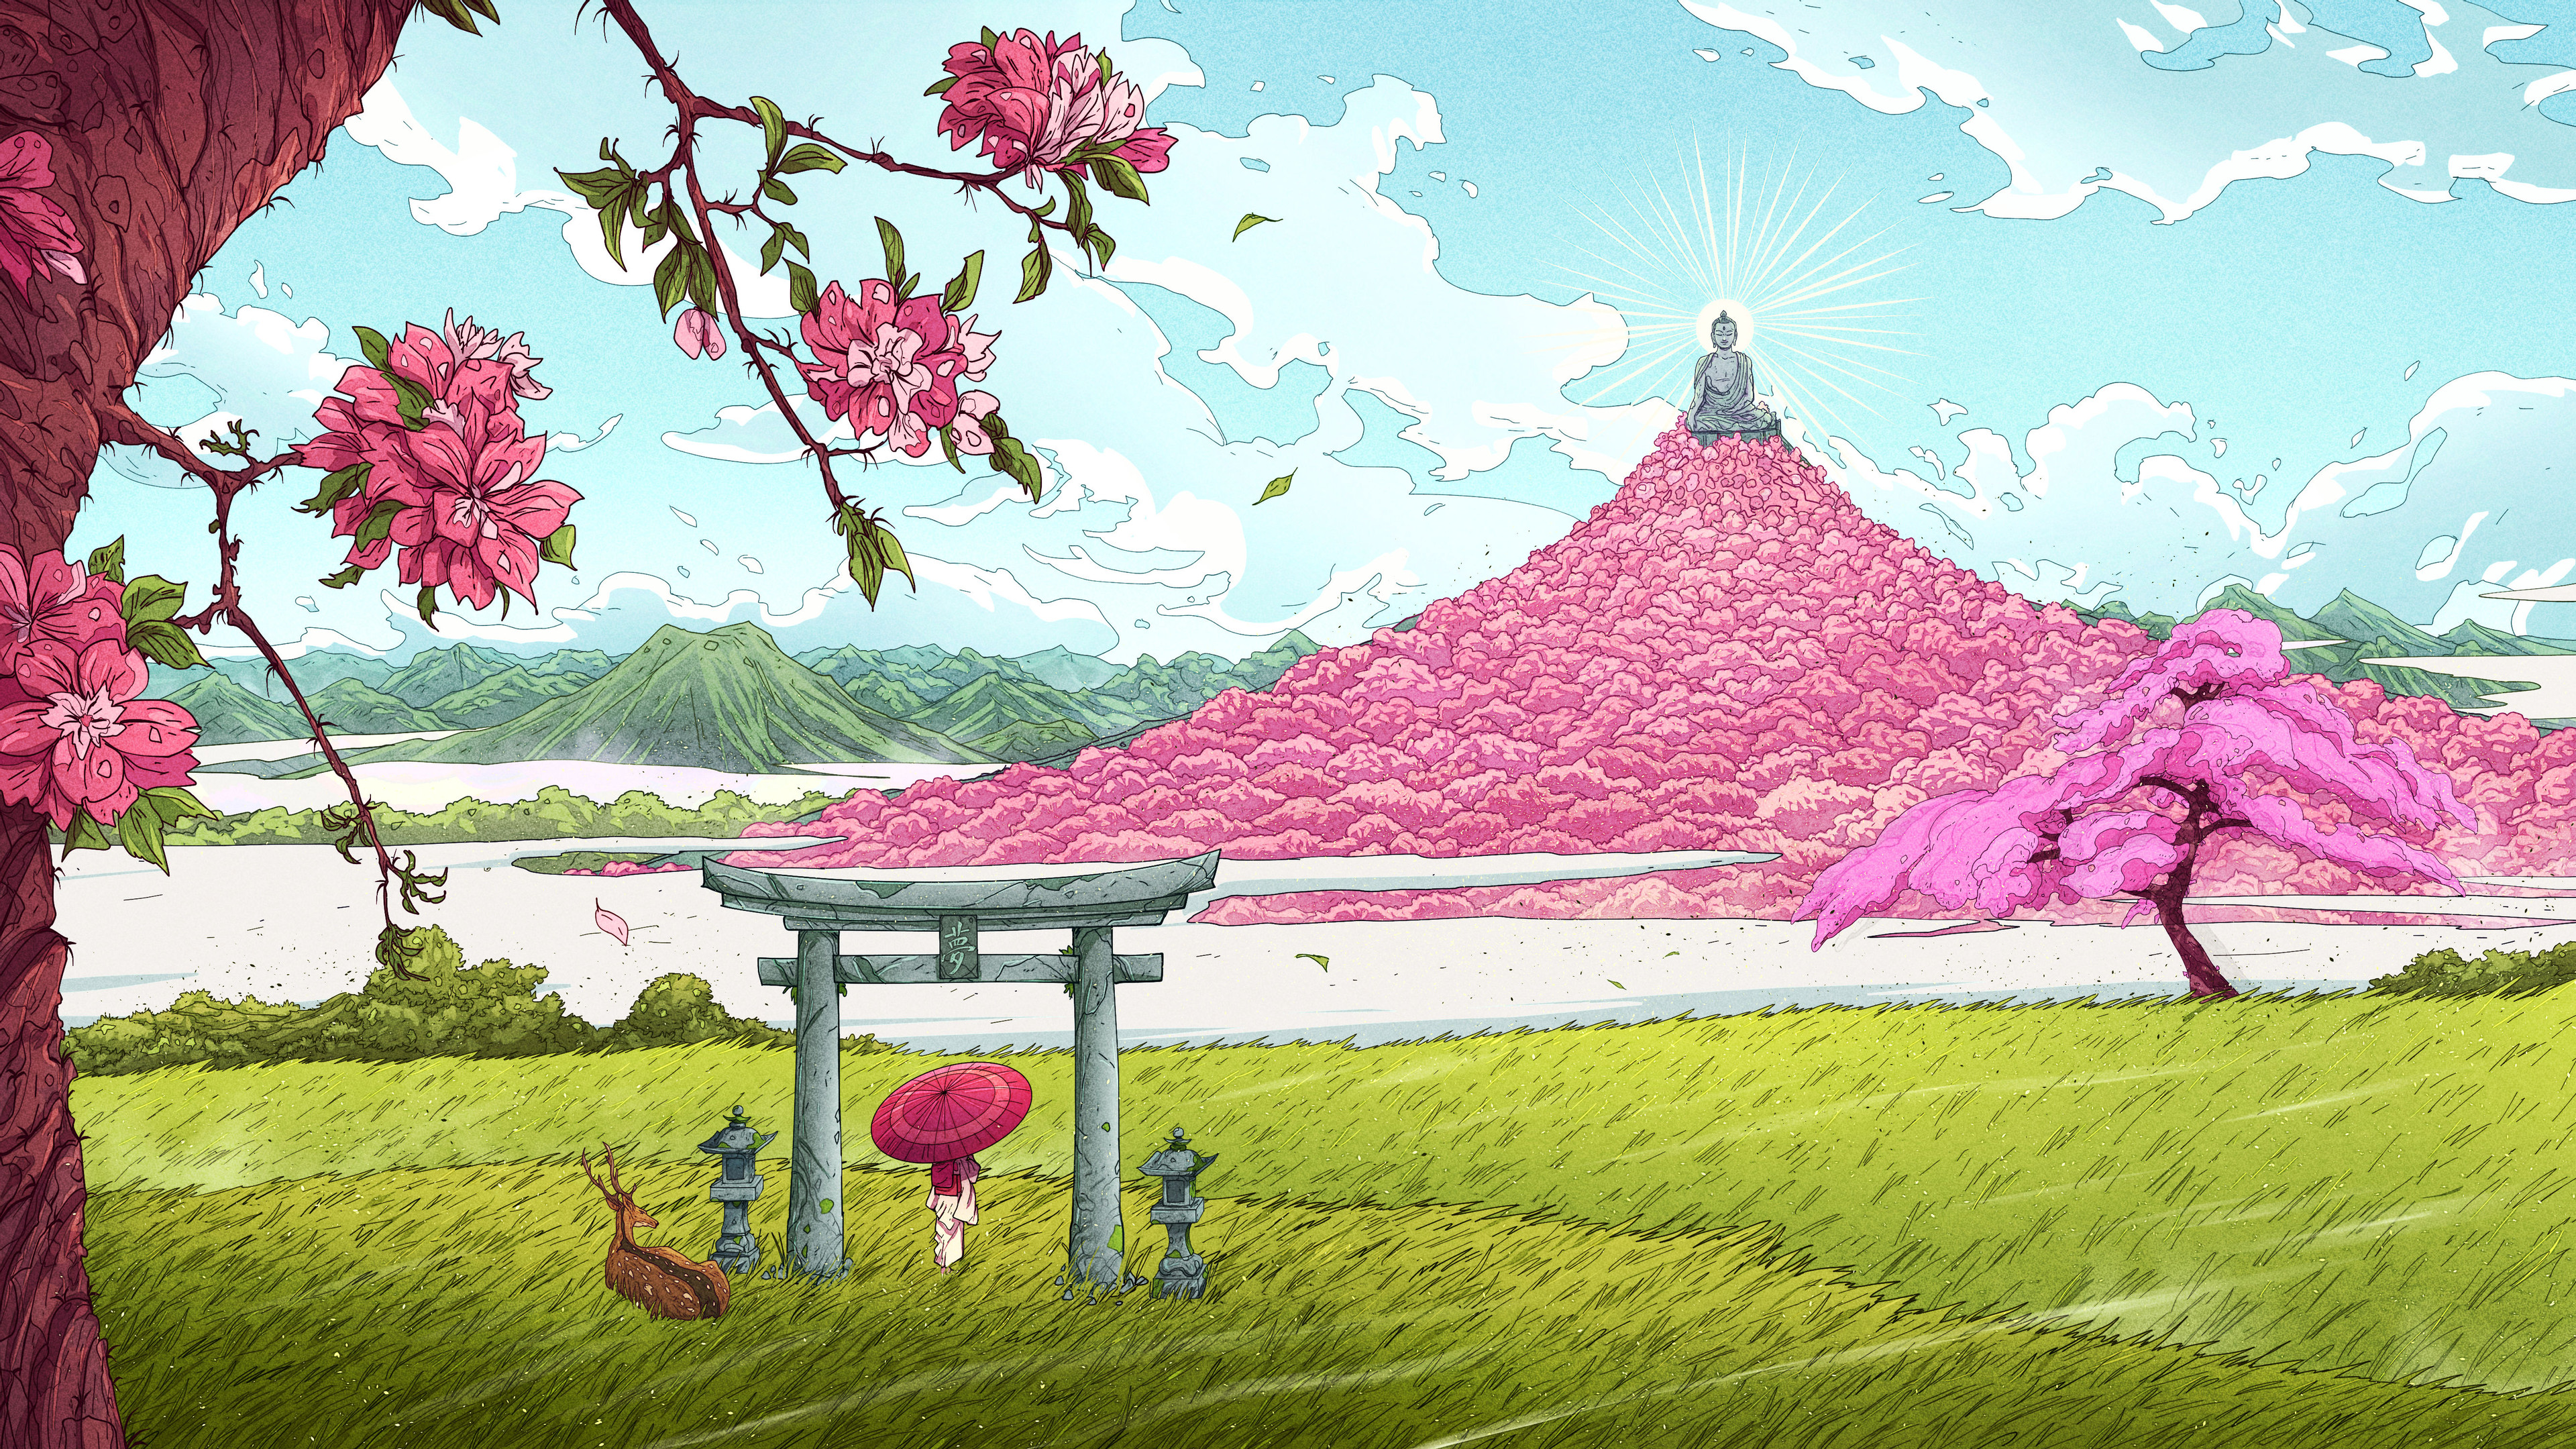 General 3840x2160 Christian Benavides digital art fantasy art Buddha Shinto arch deer mountains pink trees flowers clouds